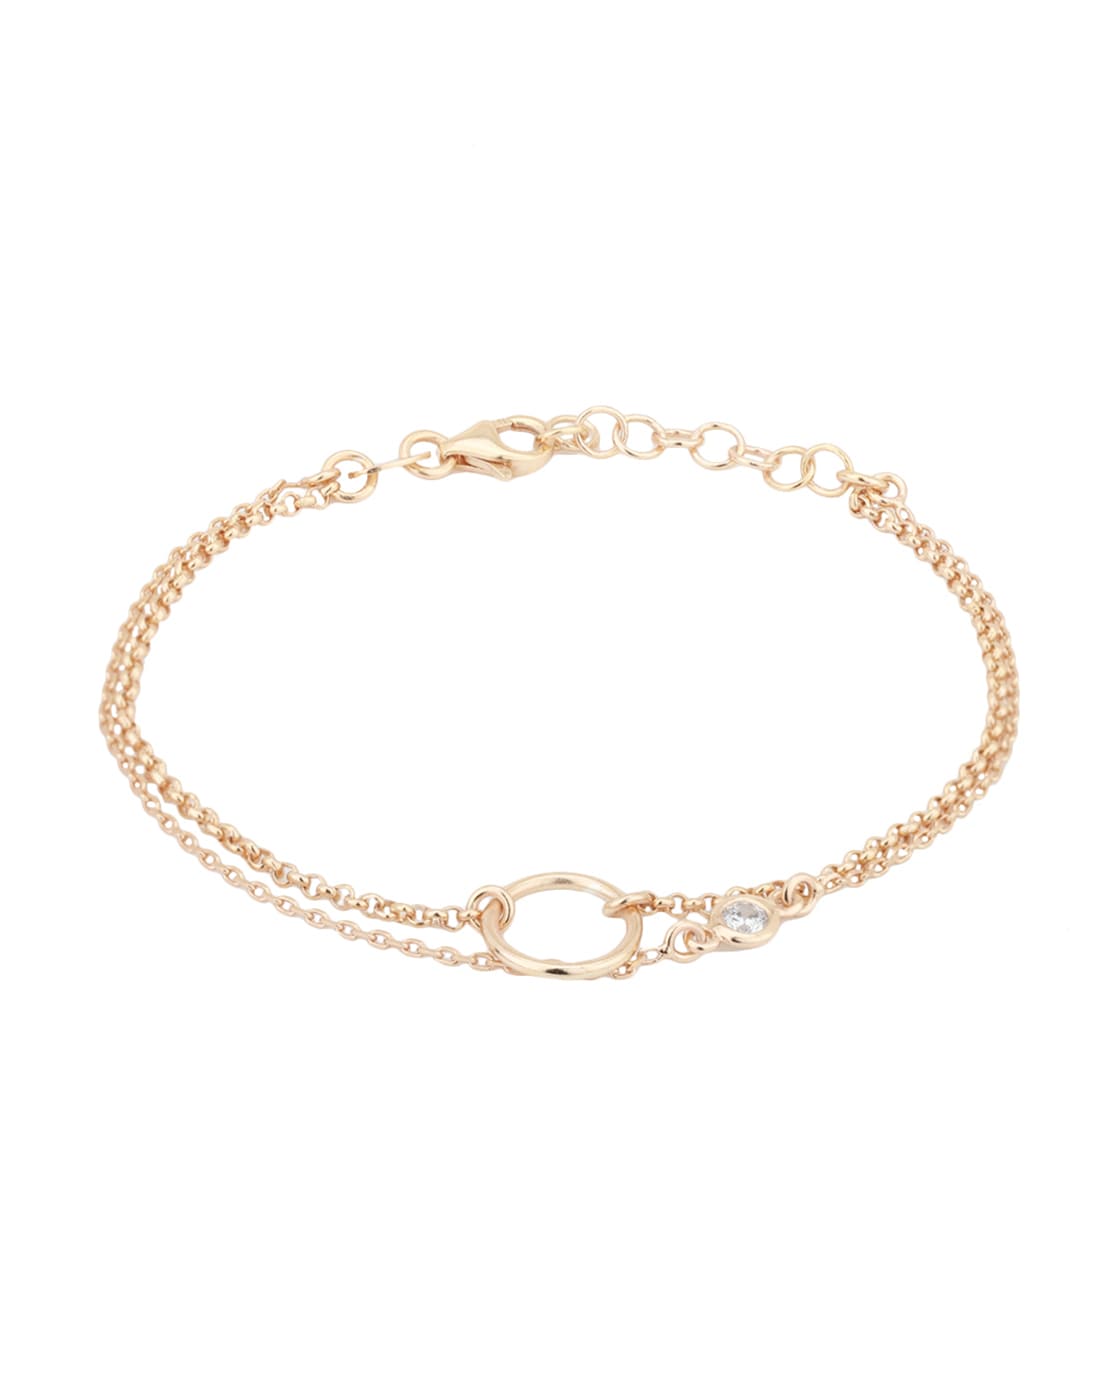 Diamond Link & Anchor Chain Bracelet - Moondance Jewelry Gallery